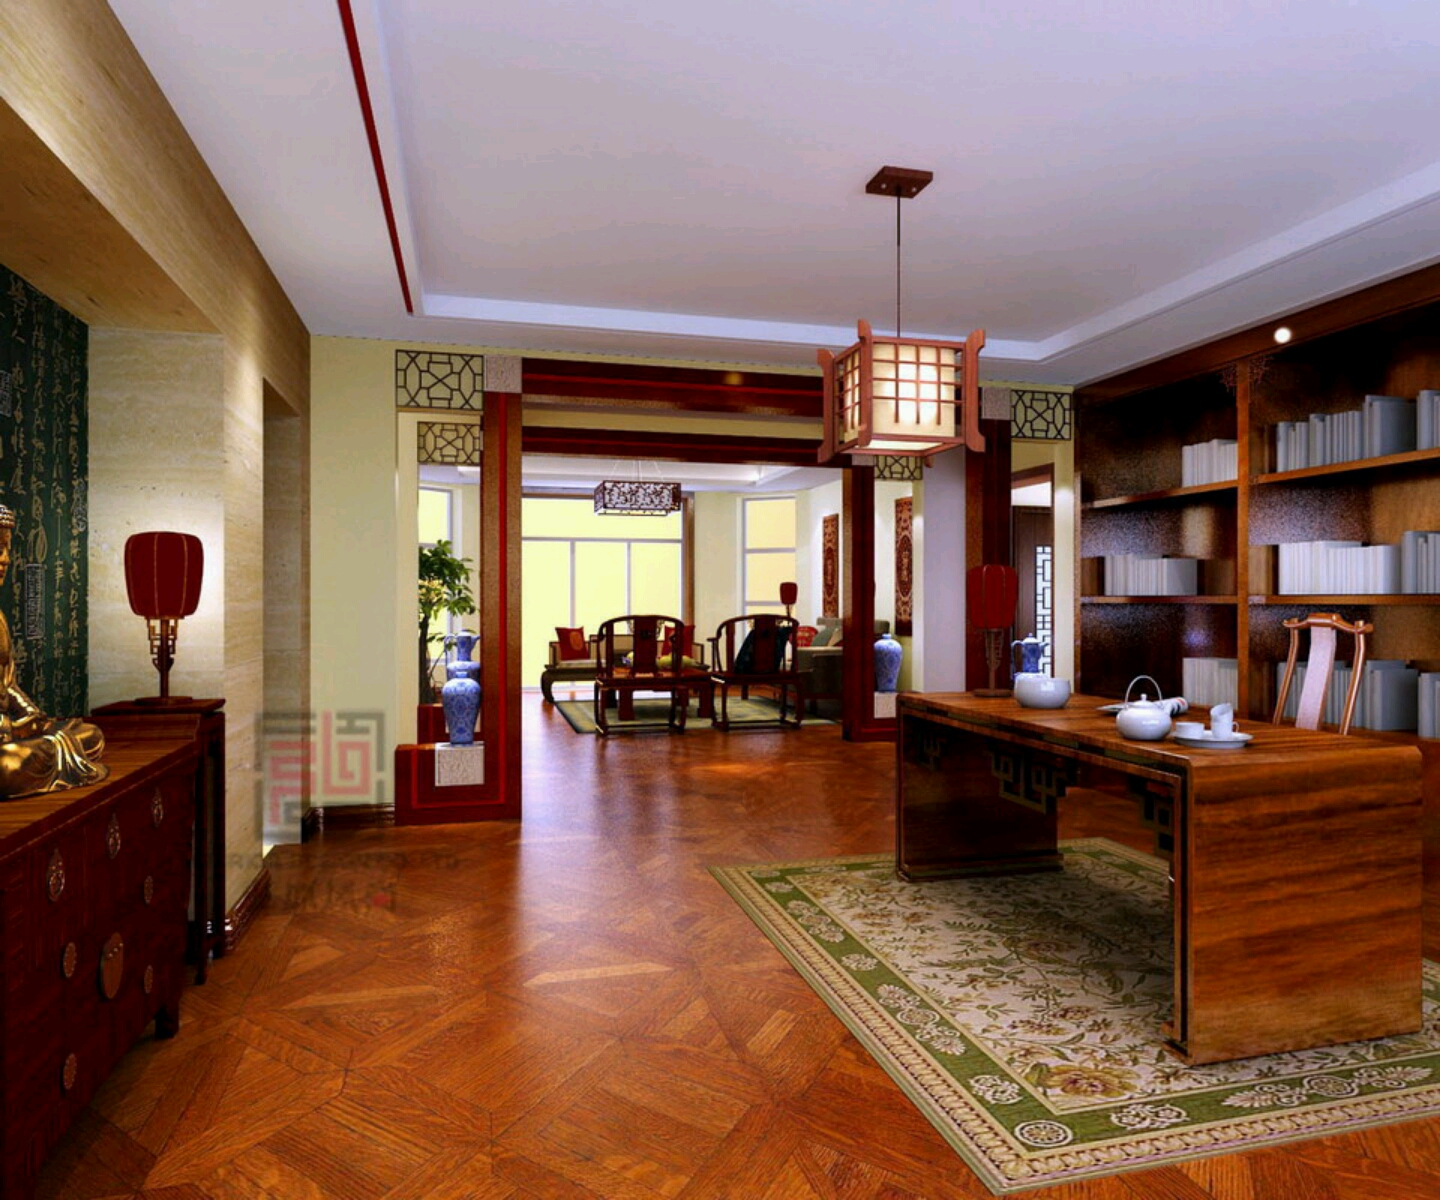 Homes interior designs studyrooms.